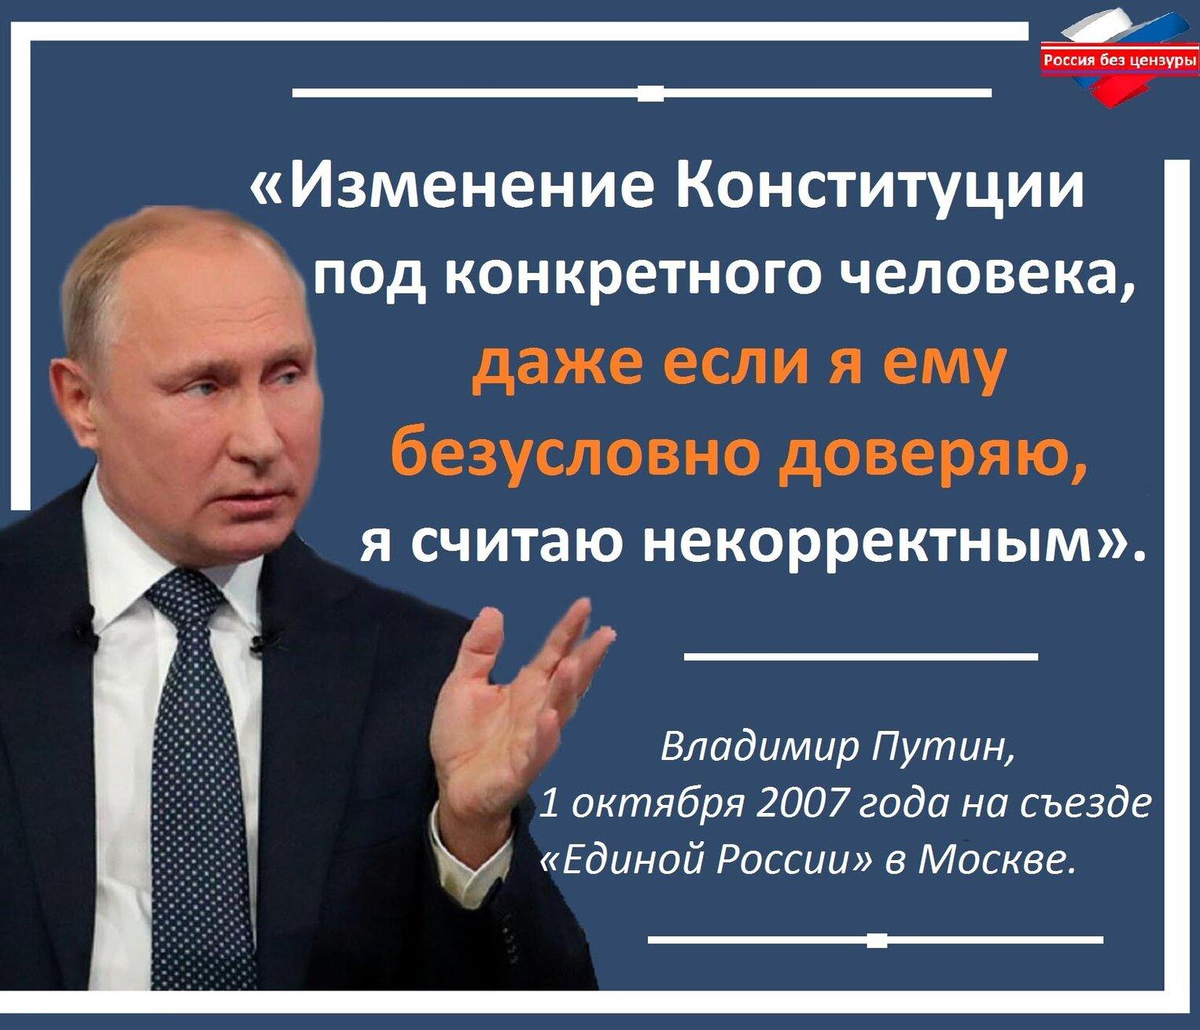 Цитата Путина про Конституцию. Законы против народа.